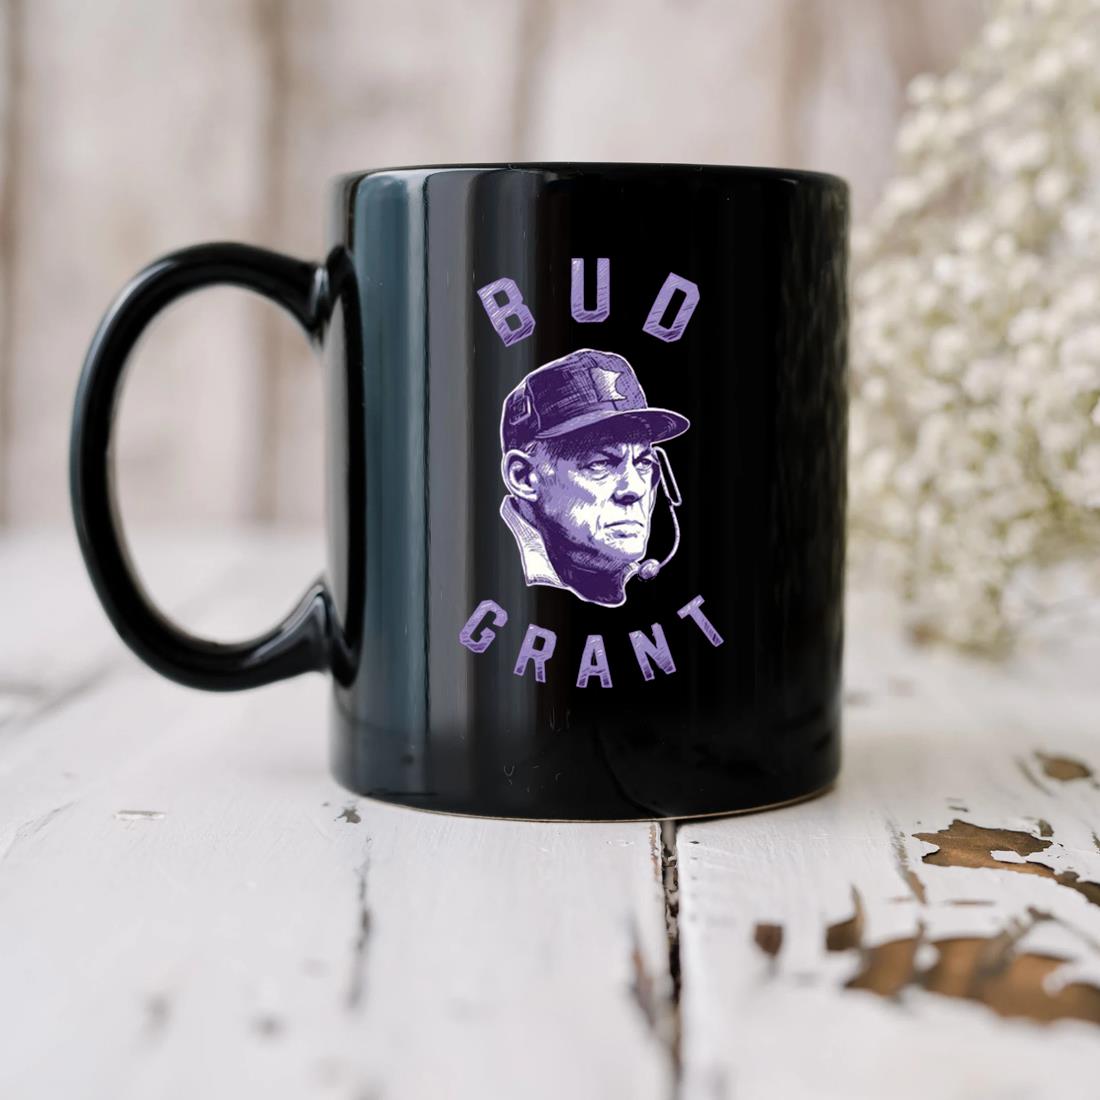 Rip Bud Grant 2023 Mug